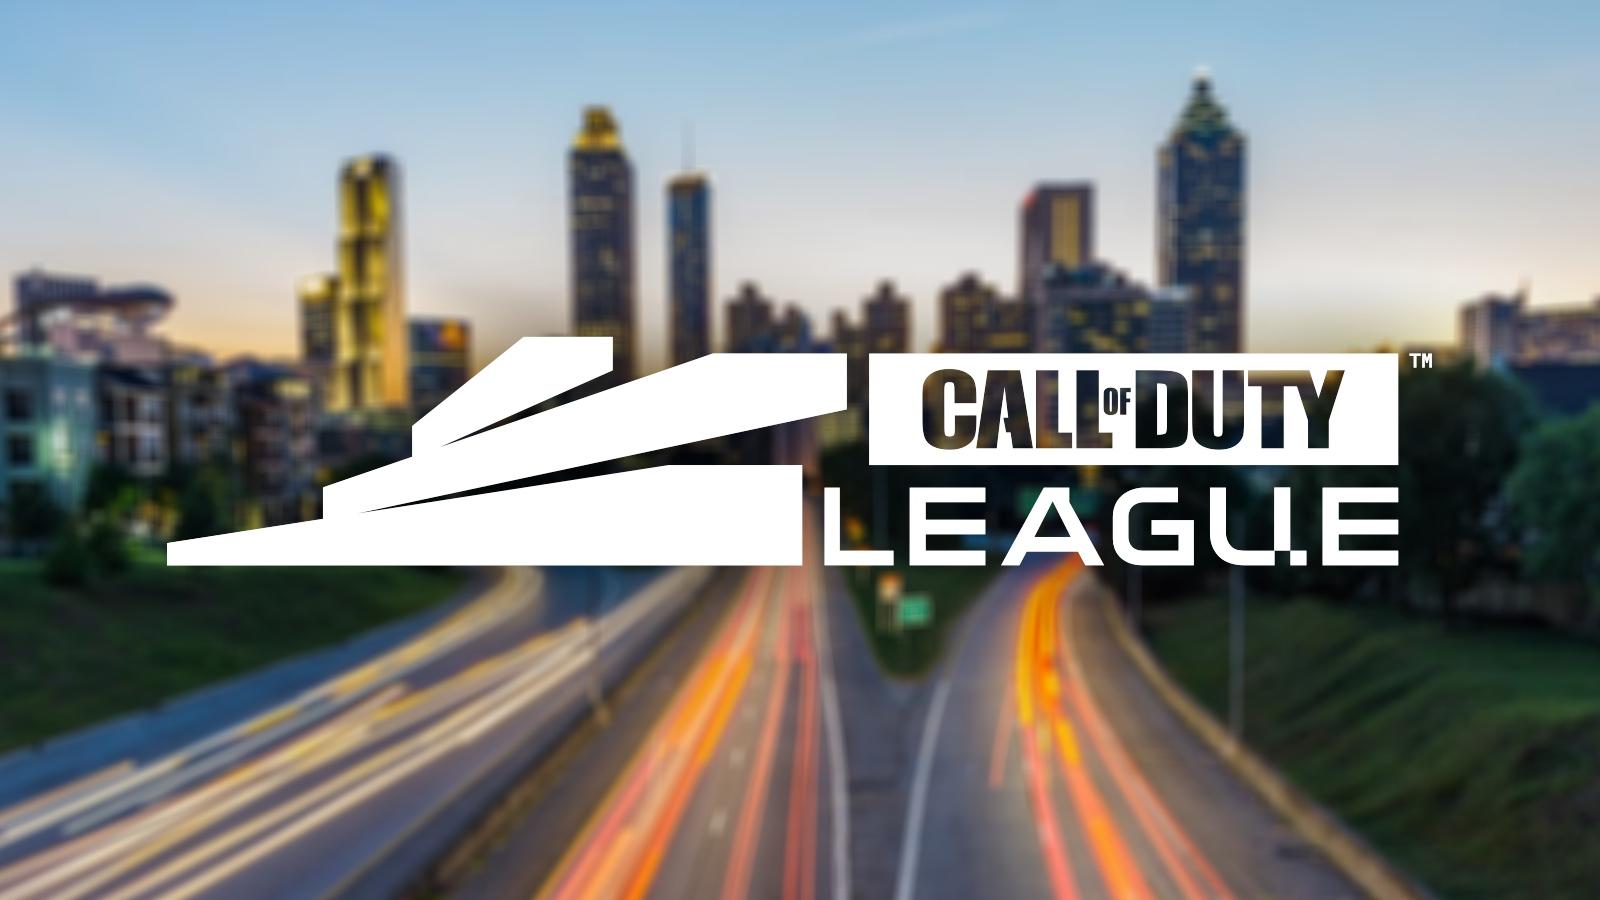 Call of Duty League logo with Atlanta skyline in background